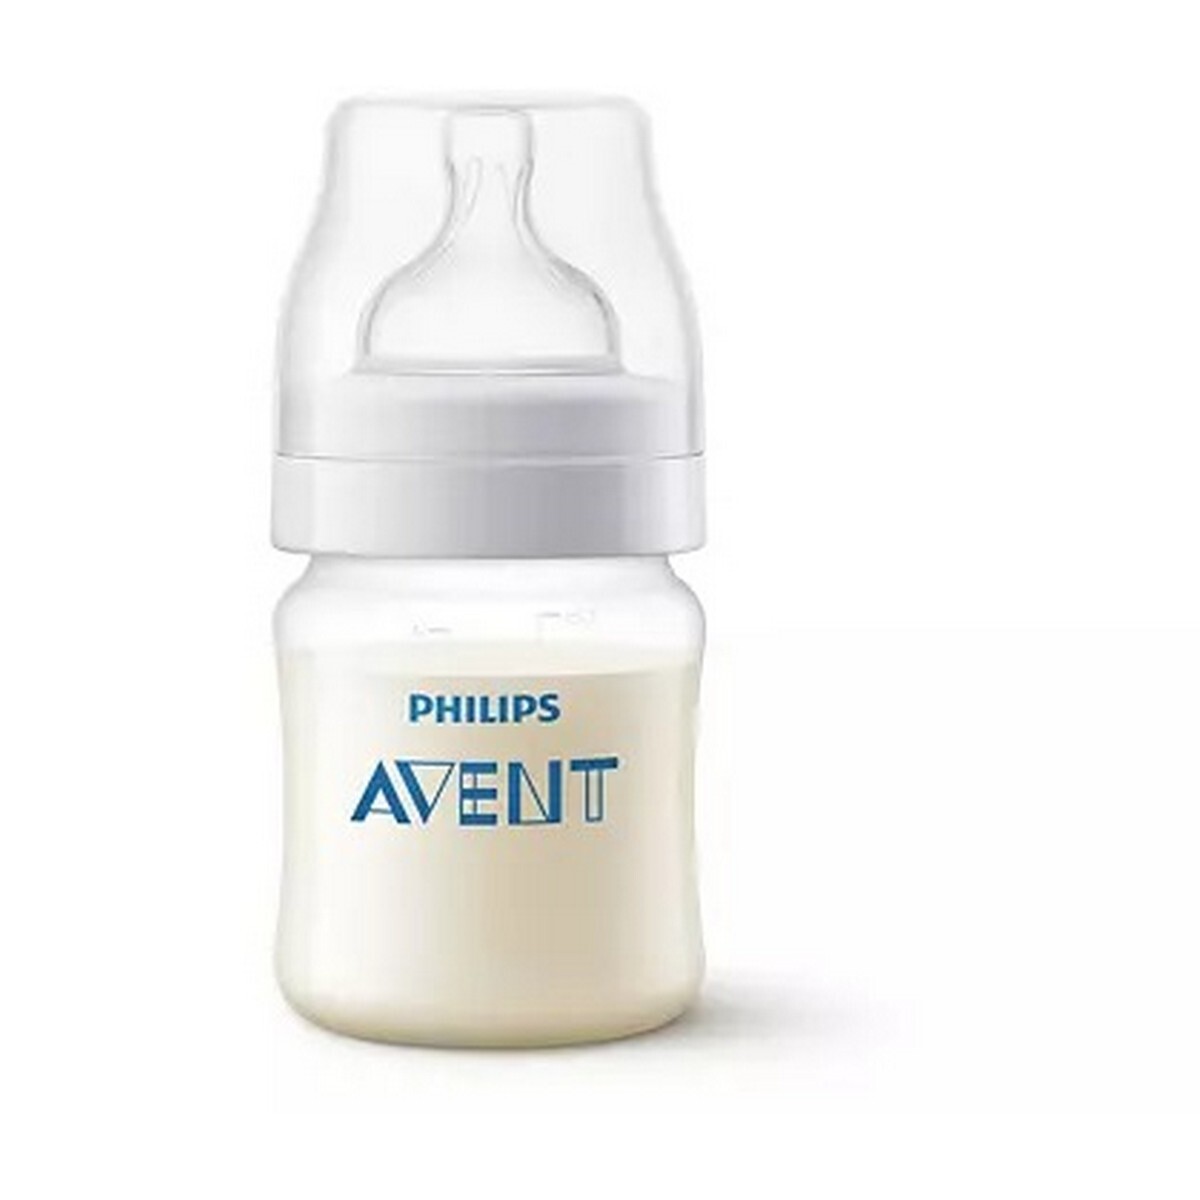 Avent Natural Bottle Twin125ml Scf810/20